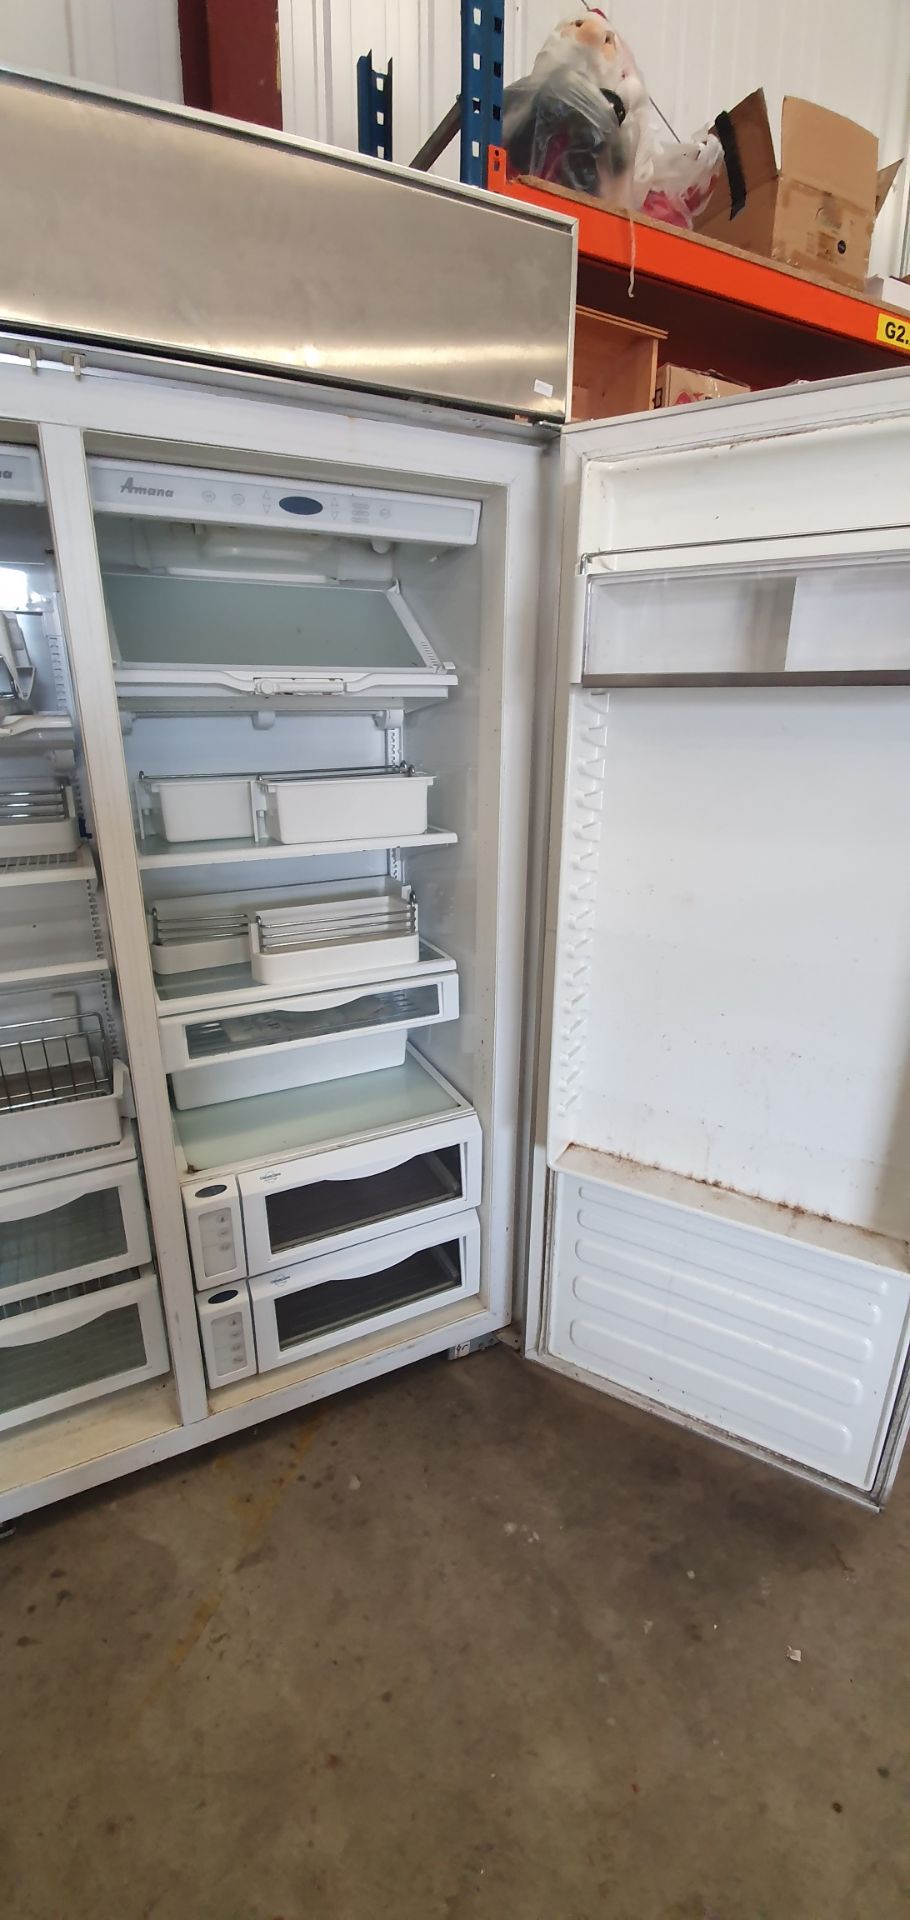 S/S Amana upright domestic fridge/freezer 1250w x 650d x 2100h - at Cornwall Street, Hull, HU8 8AF - Image 3 of 5